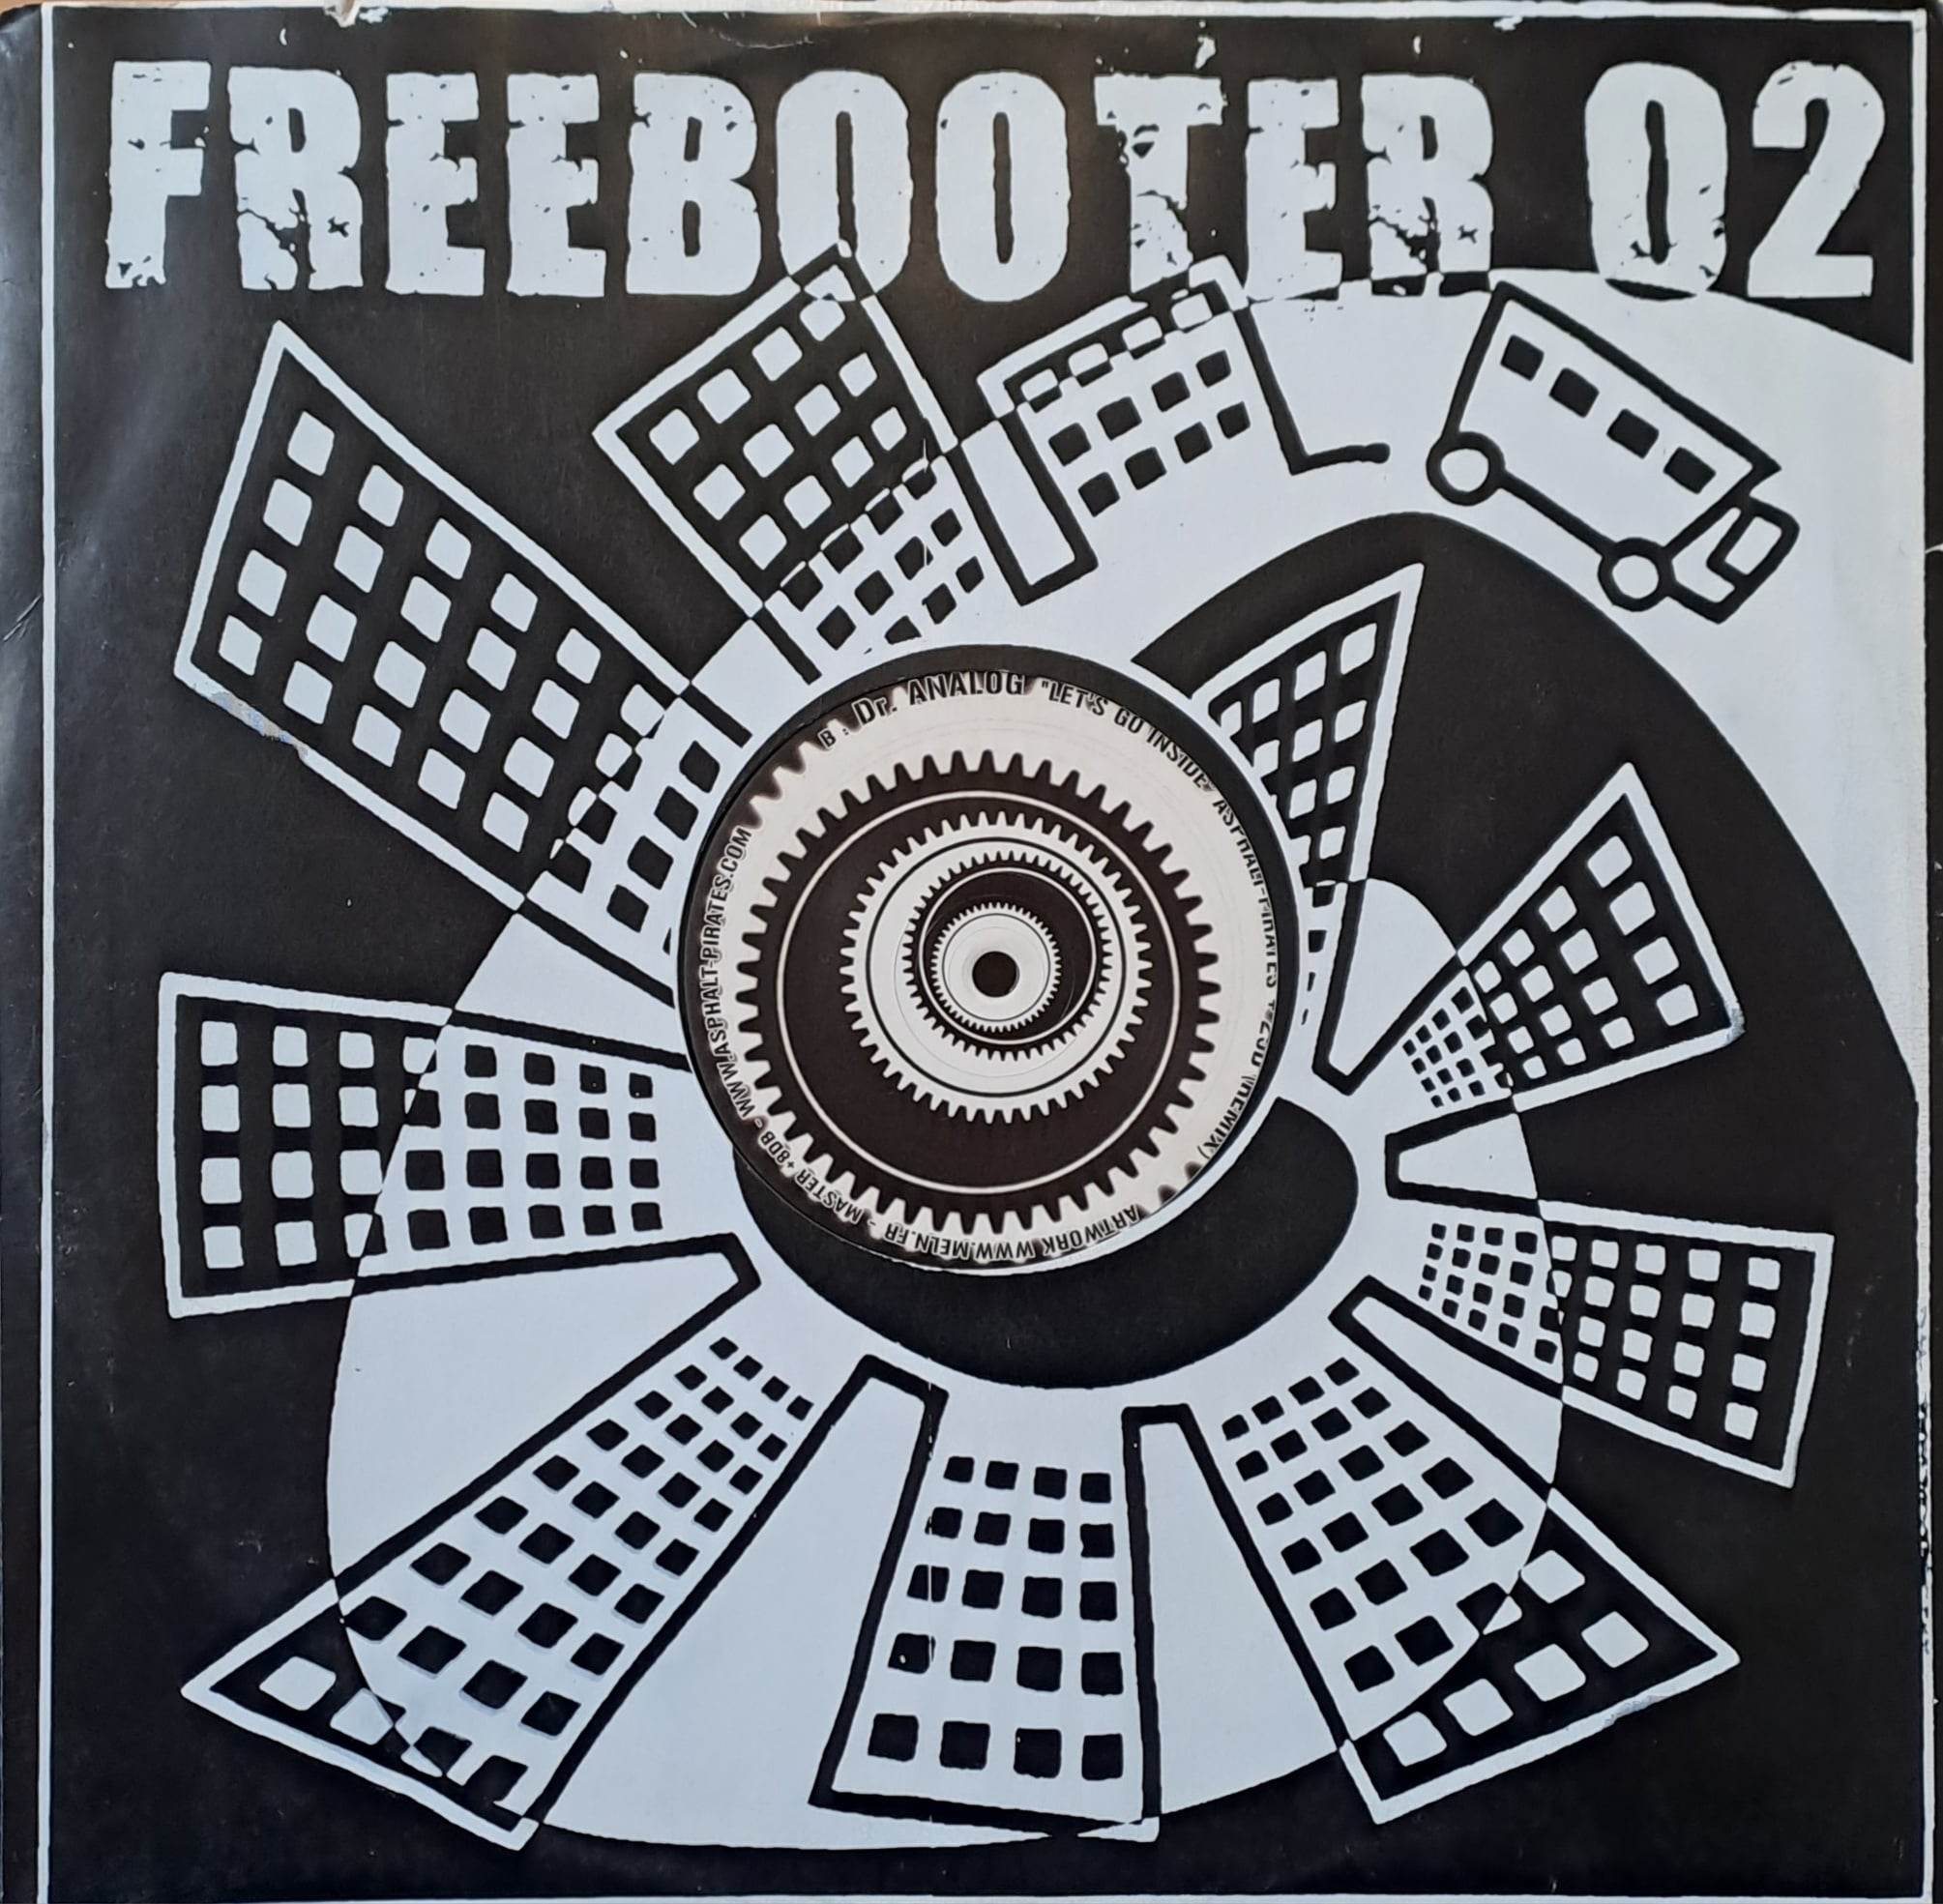 Freebooter 02 - vinyle freetekno